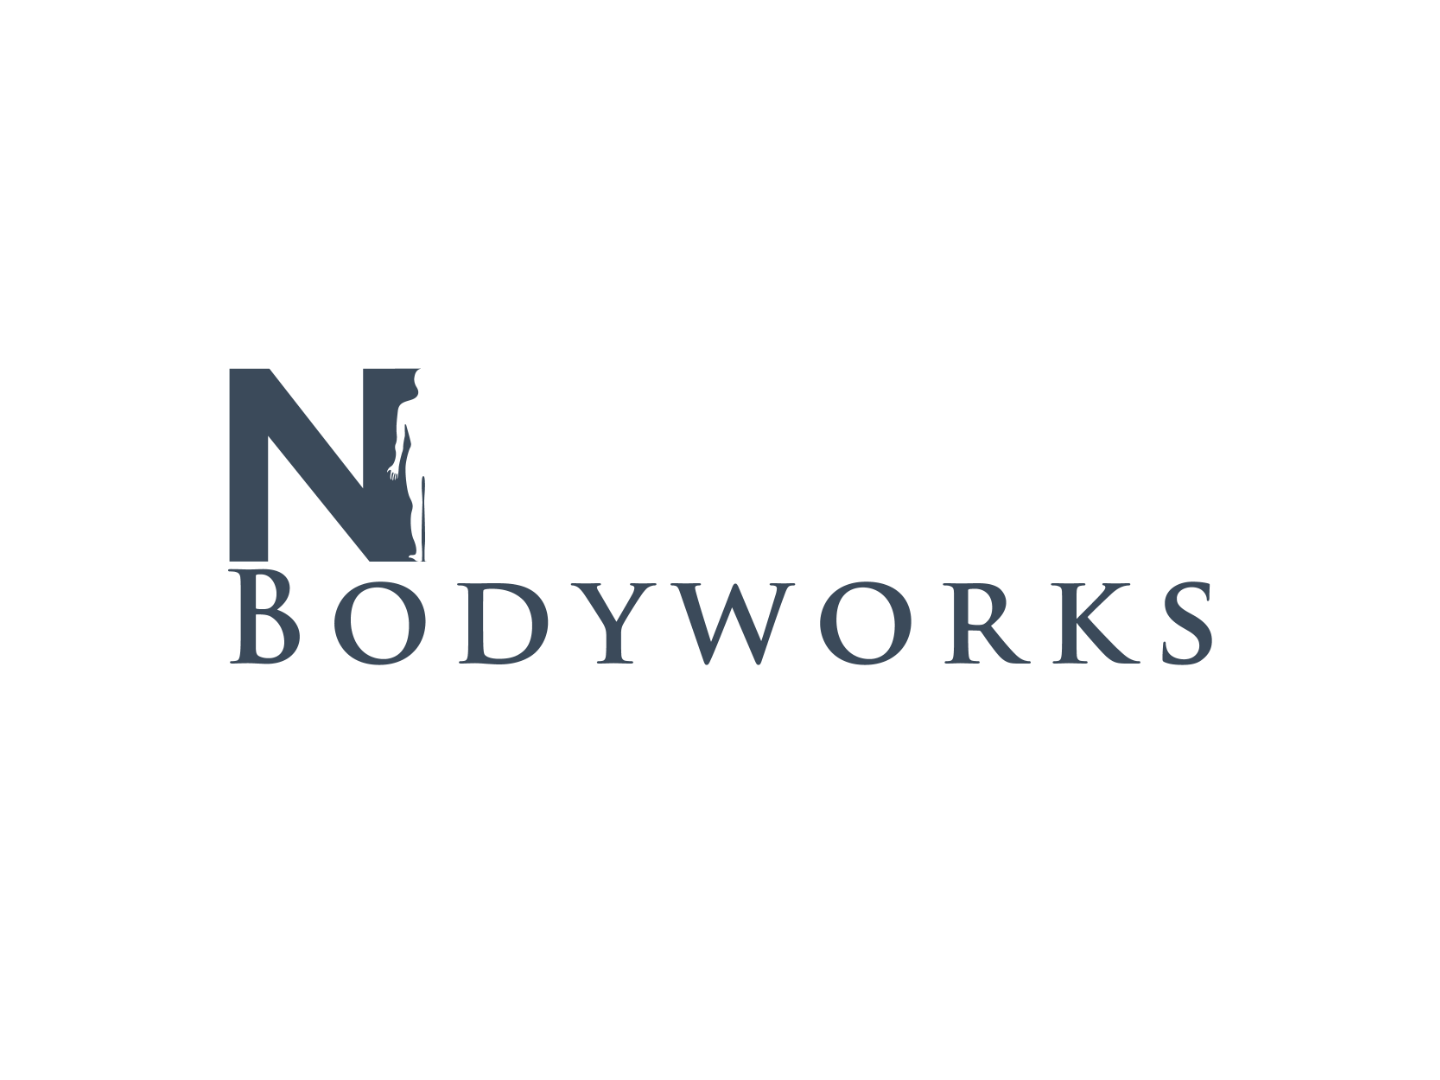 Niseko Bodyworks